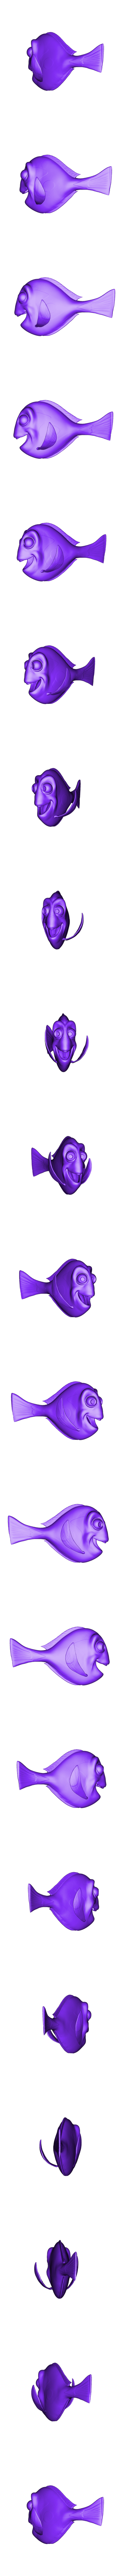 Dory-print_SubTool1.stl Download STL file Dory 3D Comic Fish • 3D printable model, udograf